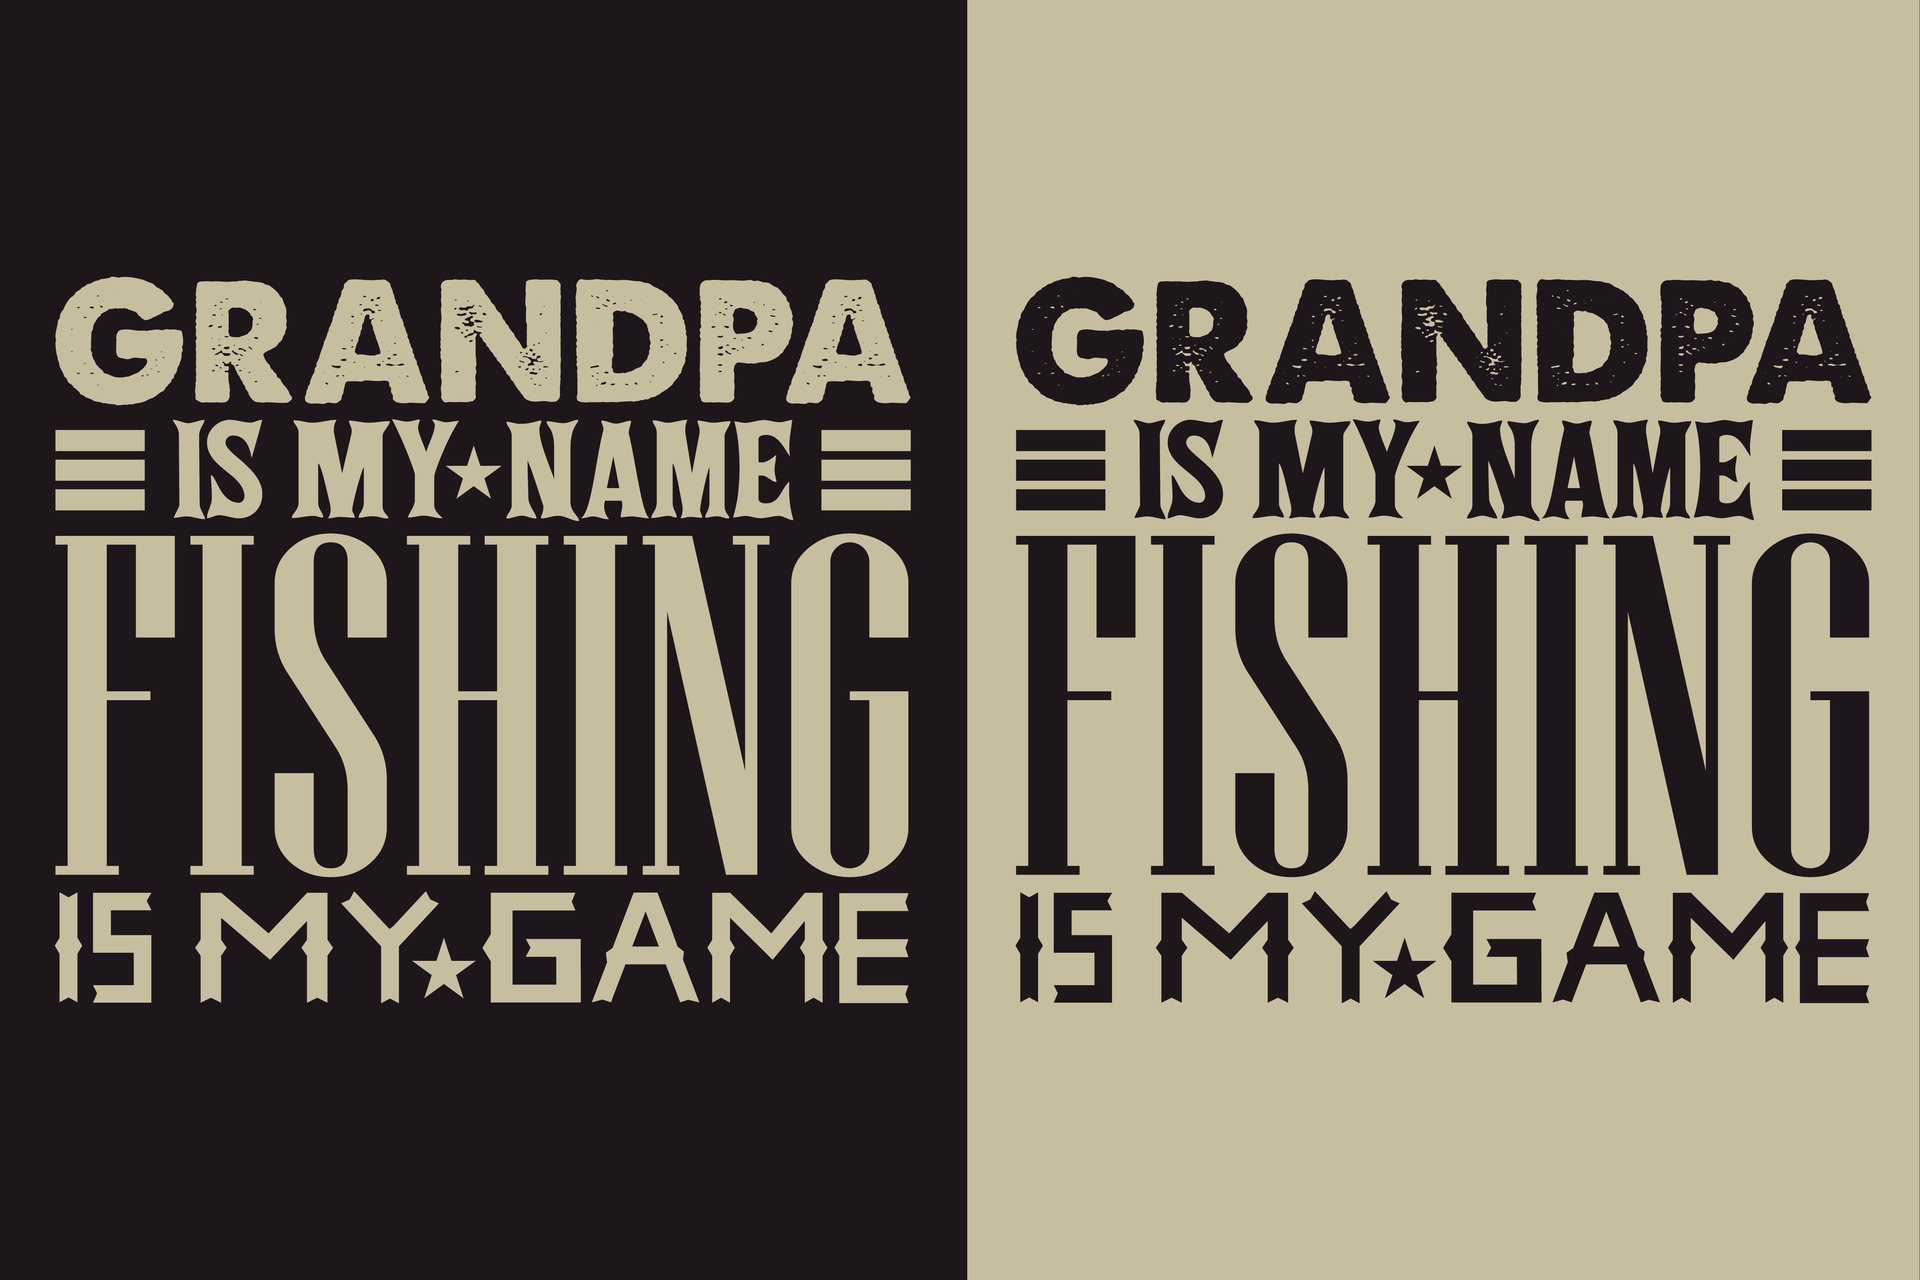 https://static.vecteezy.com/system/resources/previews/026/276/391/original/grandpa-is-my-name-fishing-is-my-gsme-grandad-t-shirt-gifts-grandpa-cool-grandpa-shirt-grandfather-shirt-gift-for-grandfather-t-shirt-for-best-grandfather-ever-vector.jpg